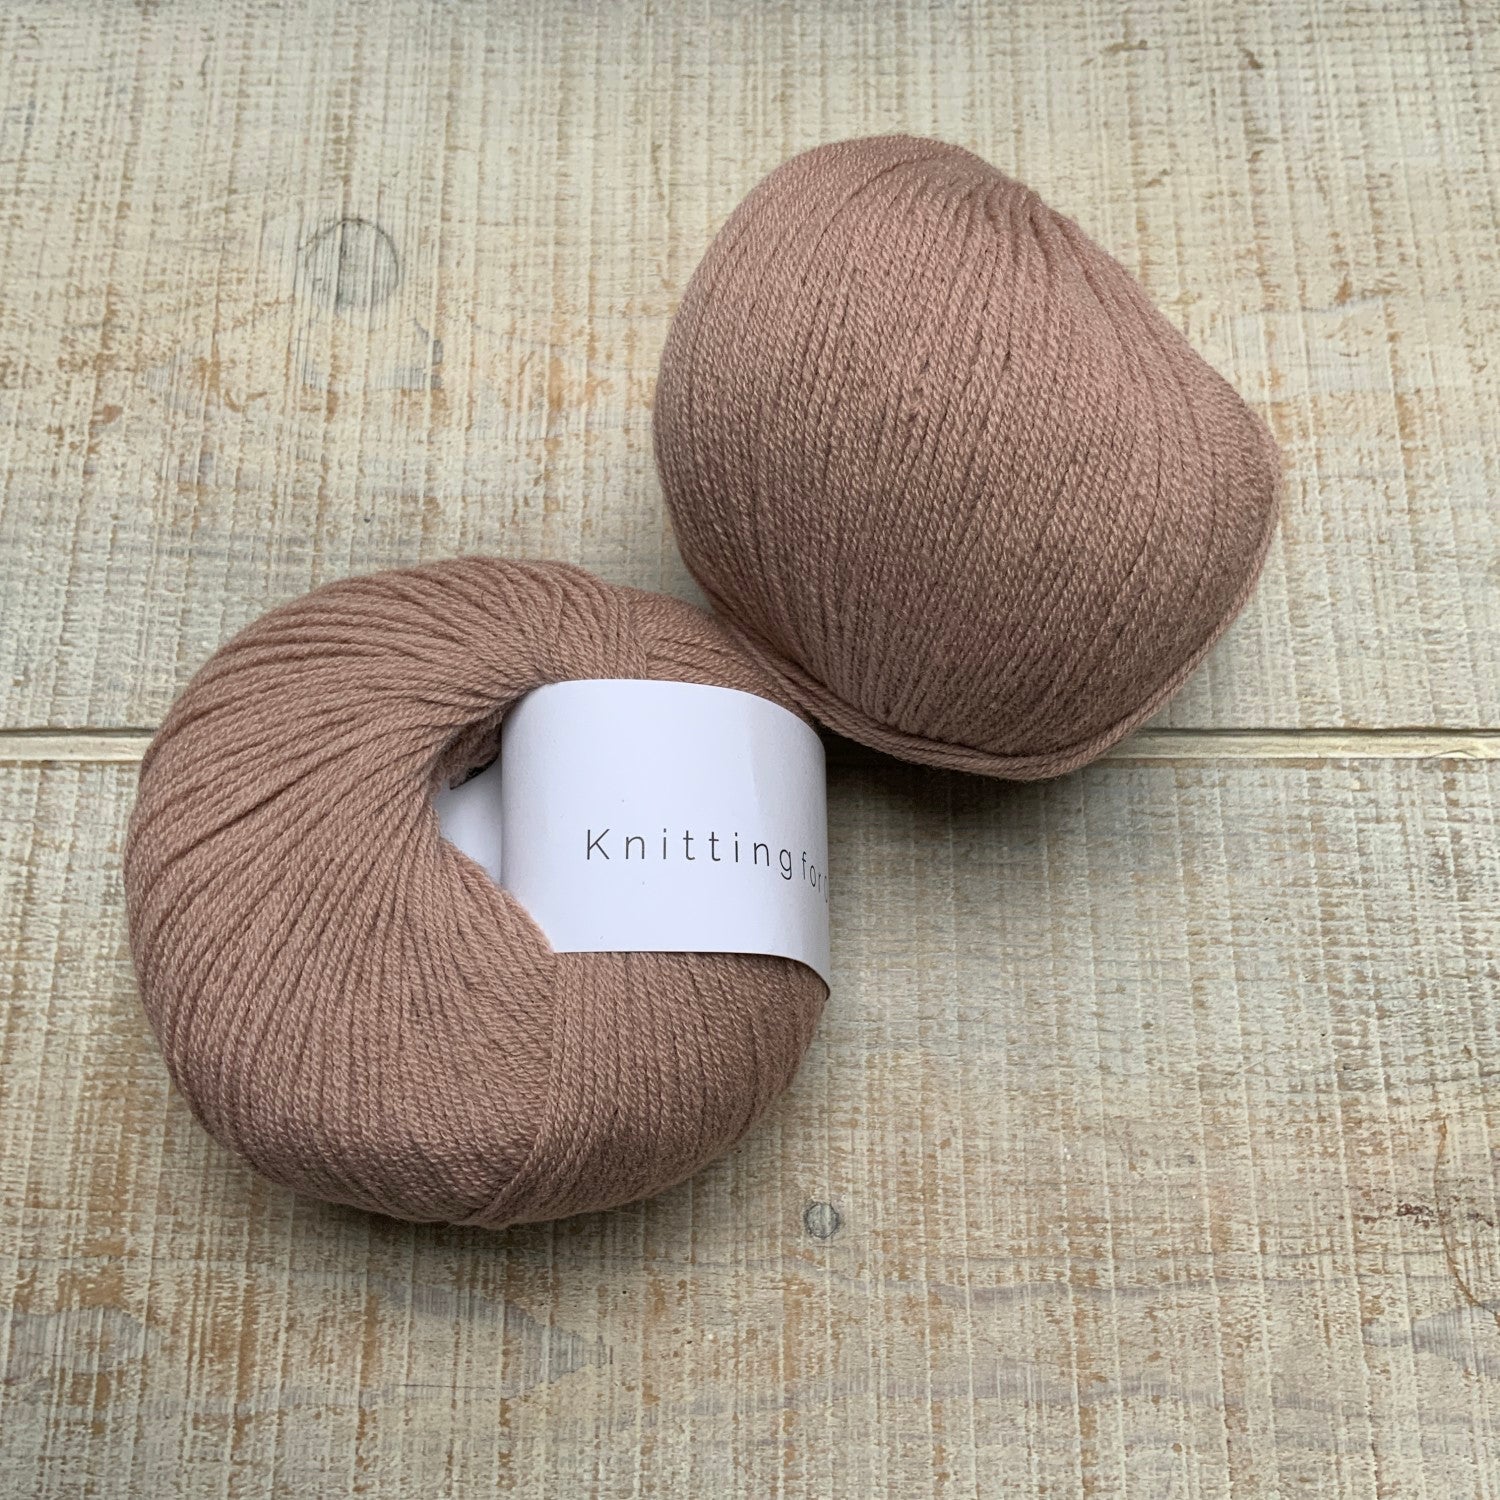 Knitting for Olive - Knitting in Skandi Chic buy online